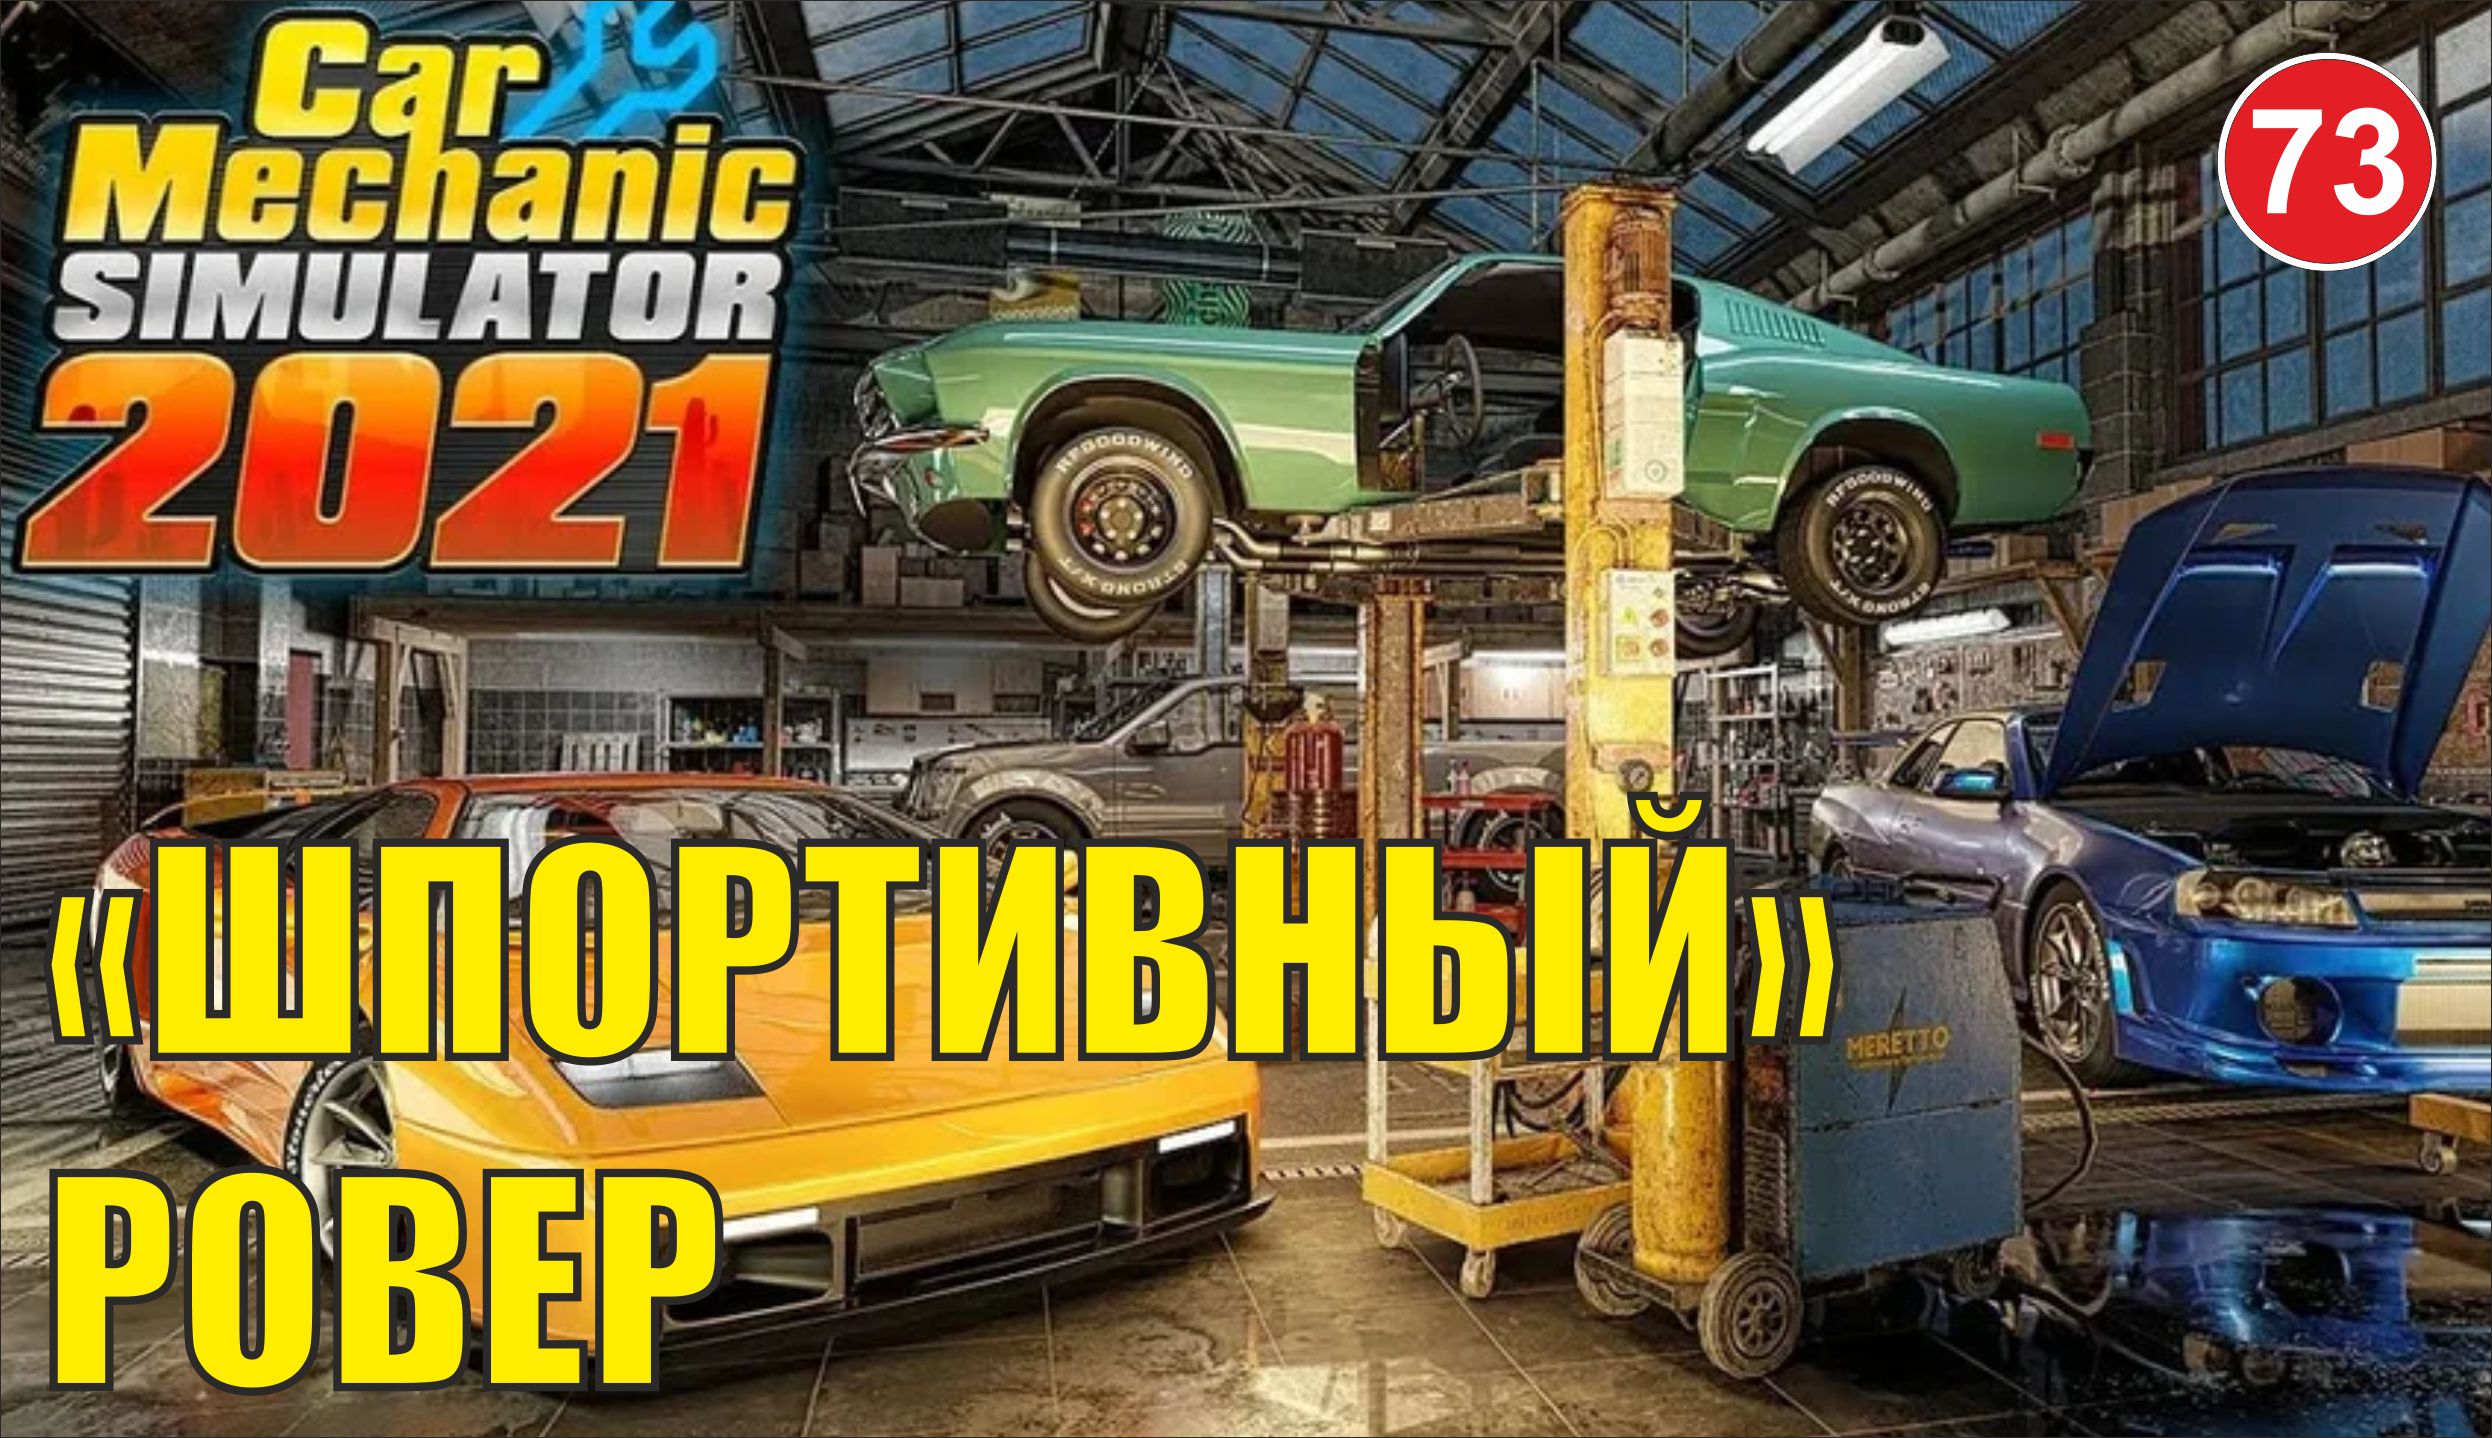 Car Mechanic Simulator 2021 - "Шпортивный" Ровер